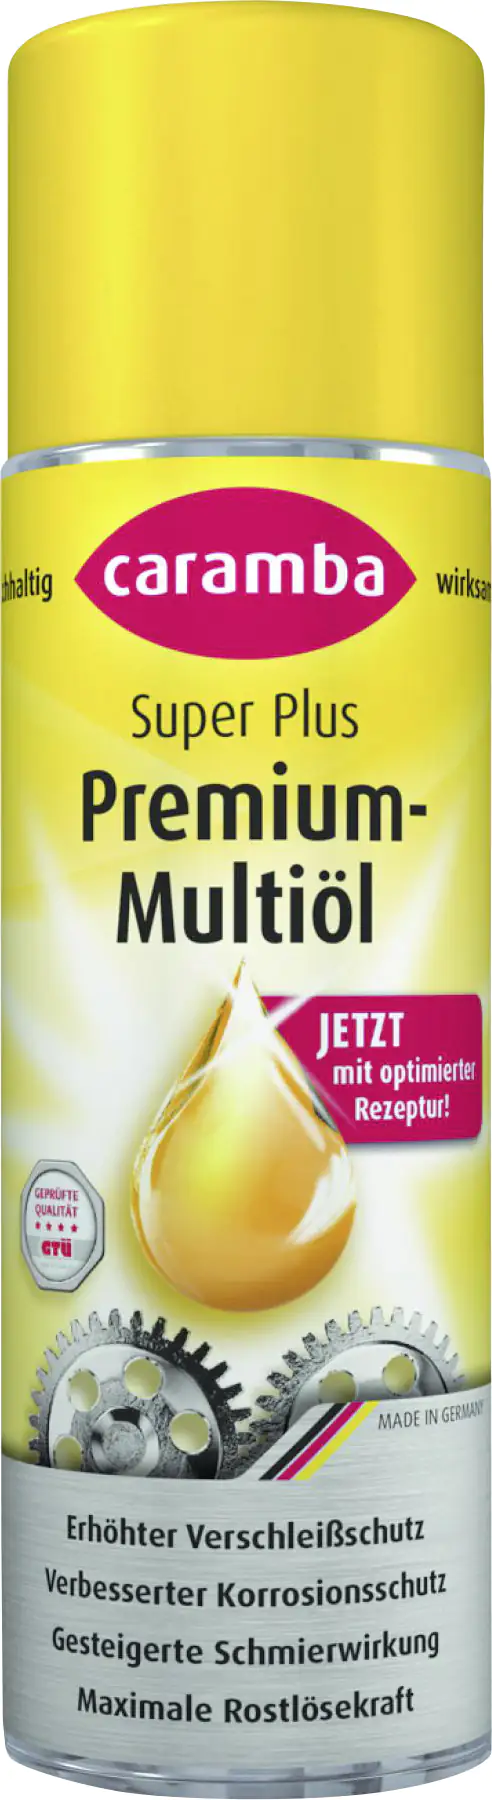 Multi-Spray Caramba Super Plus (Premium) 300 ml jetzt kaufen bei